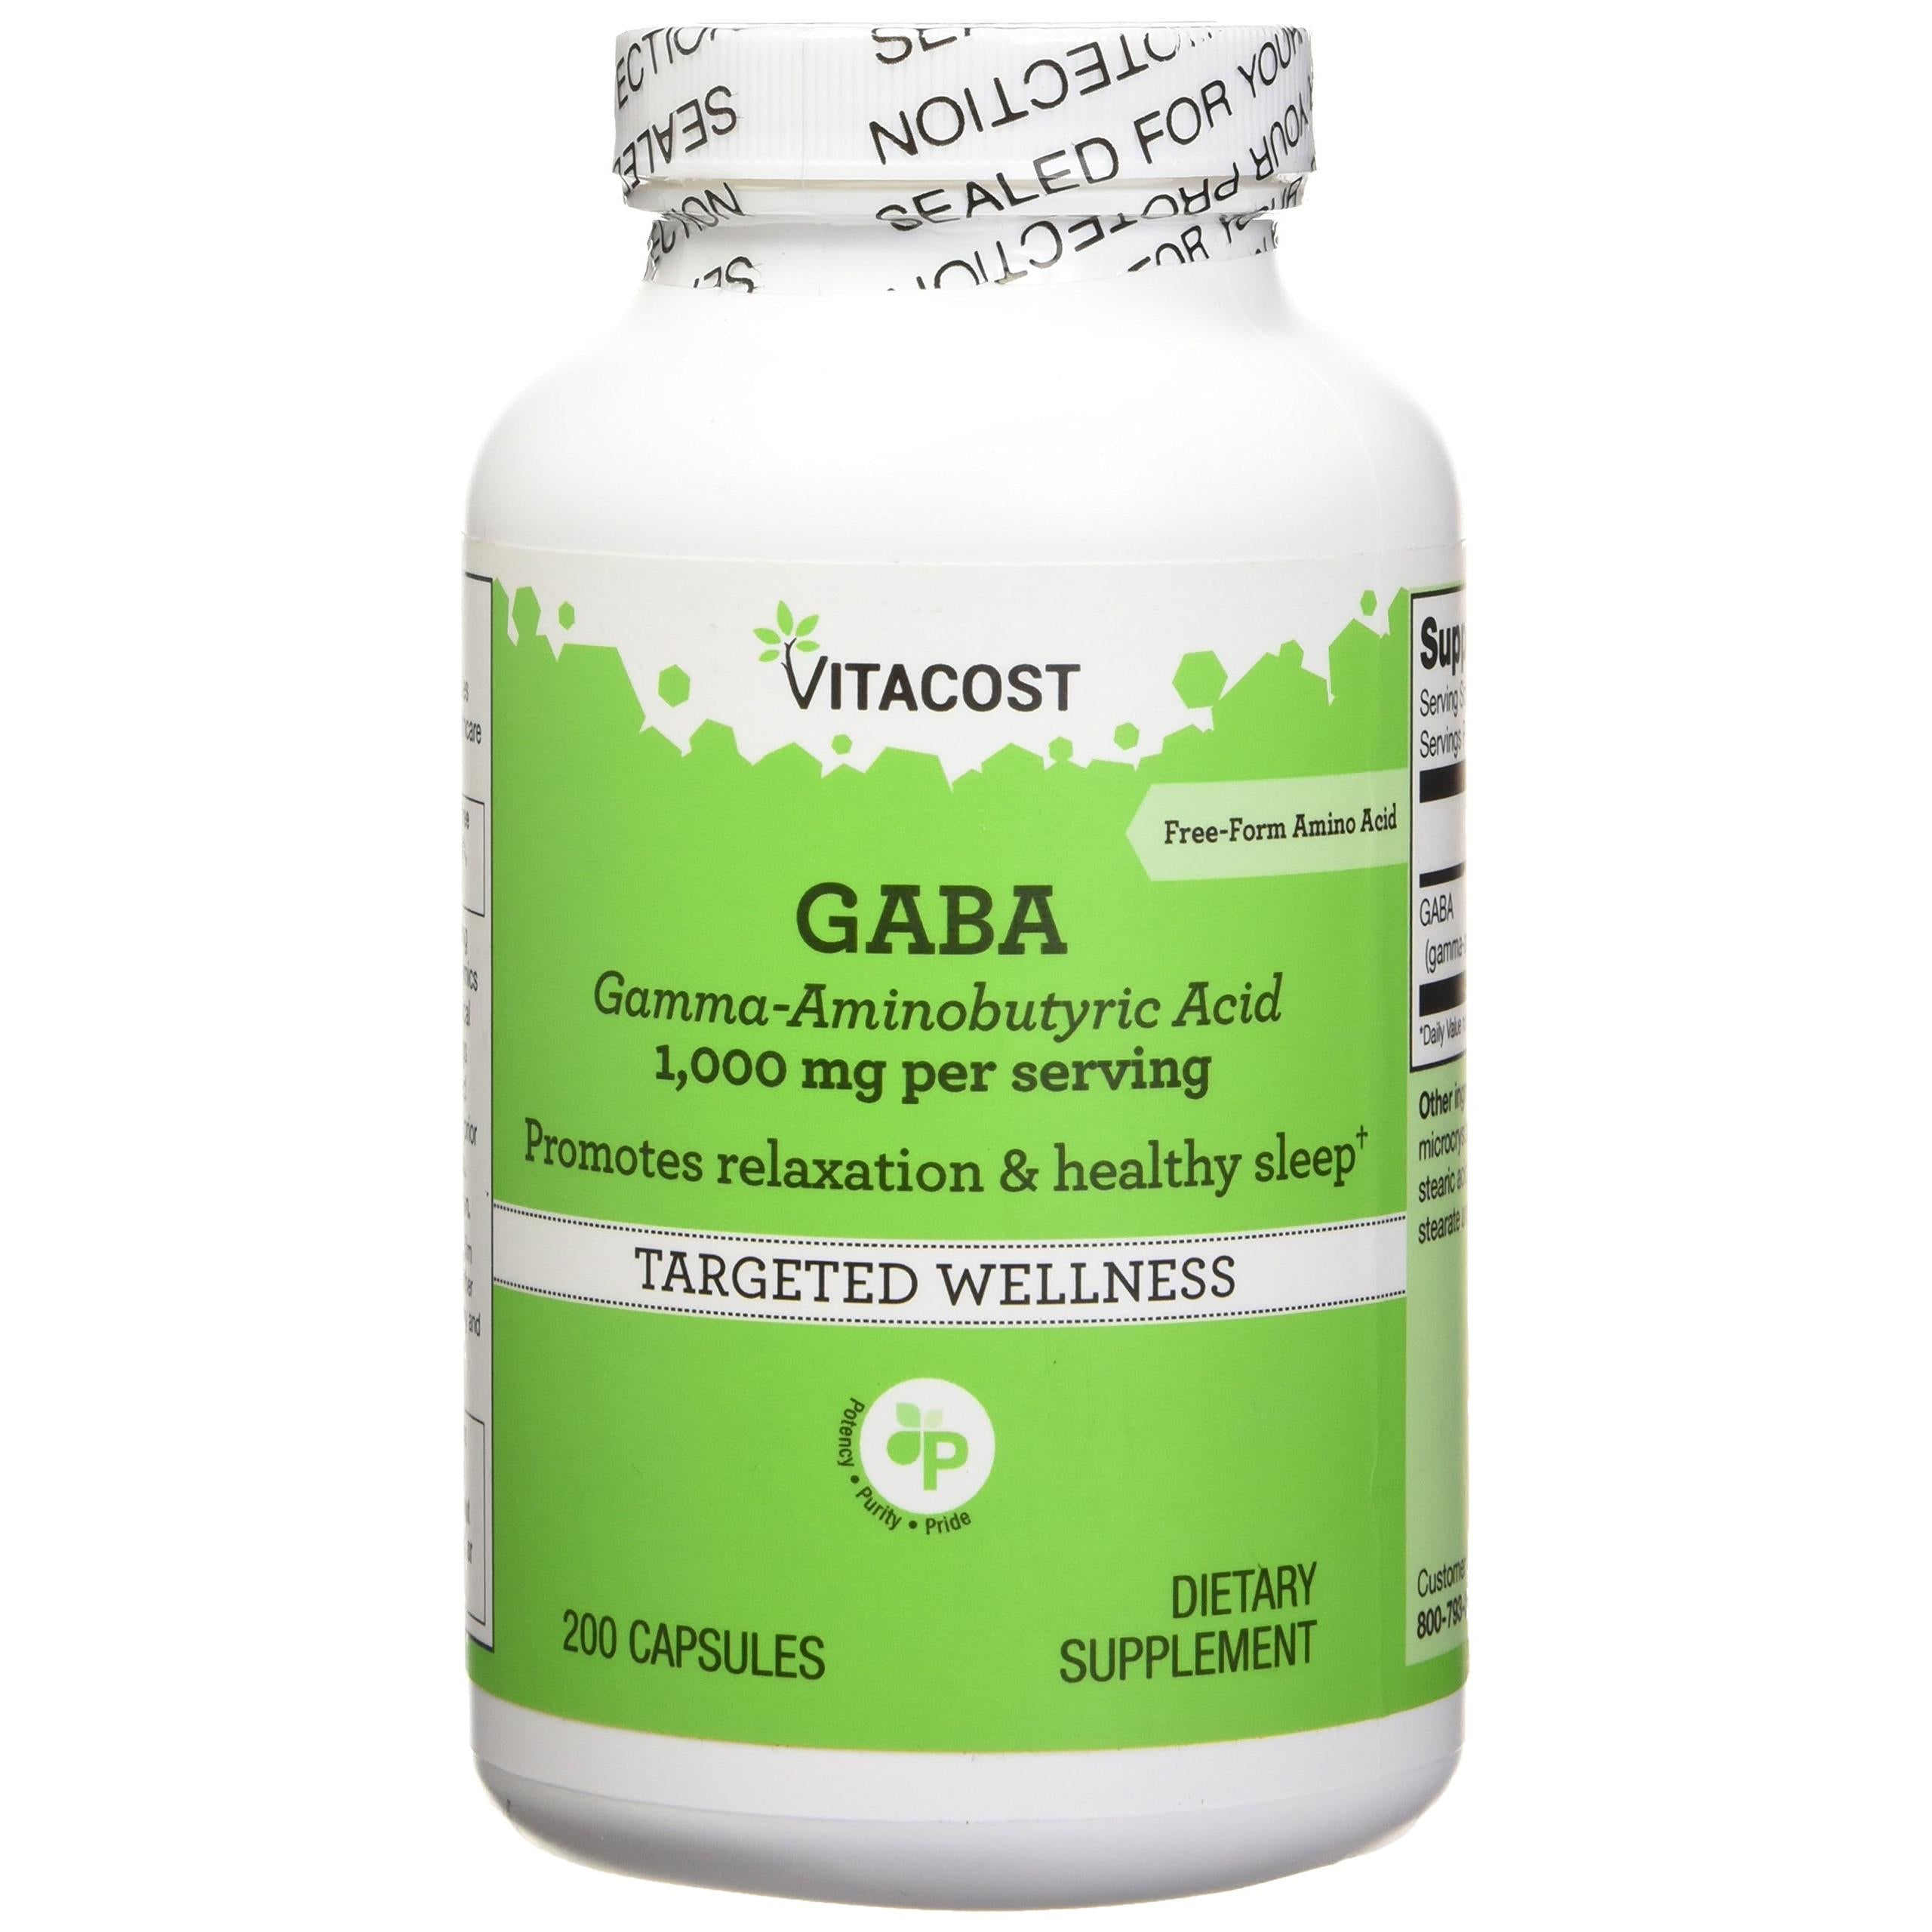 Vitacost GABA Gamma - Aminobutyric Acid - 1,000 mg per Serving - 200 Capsules